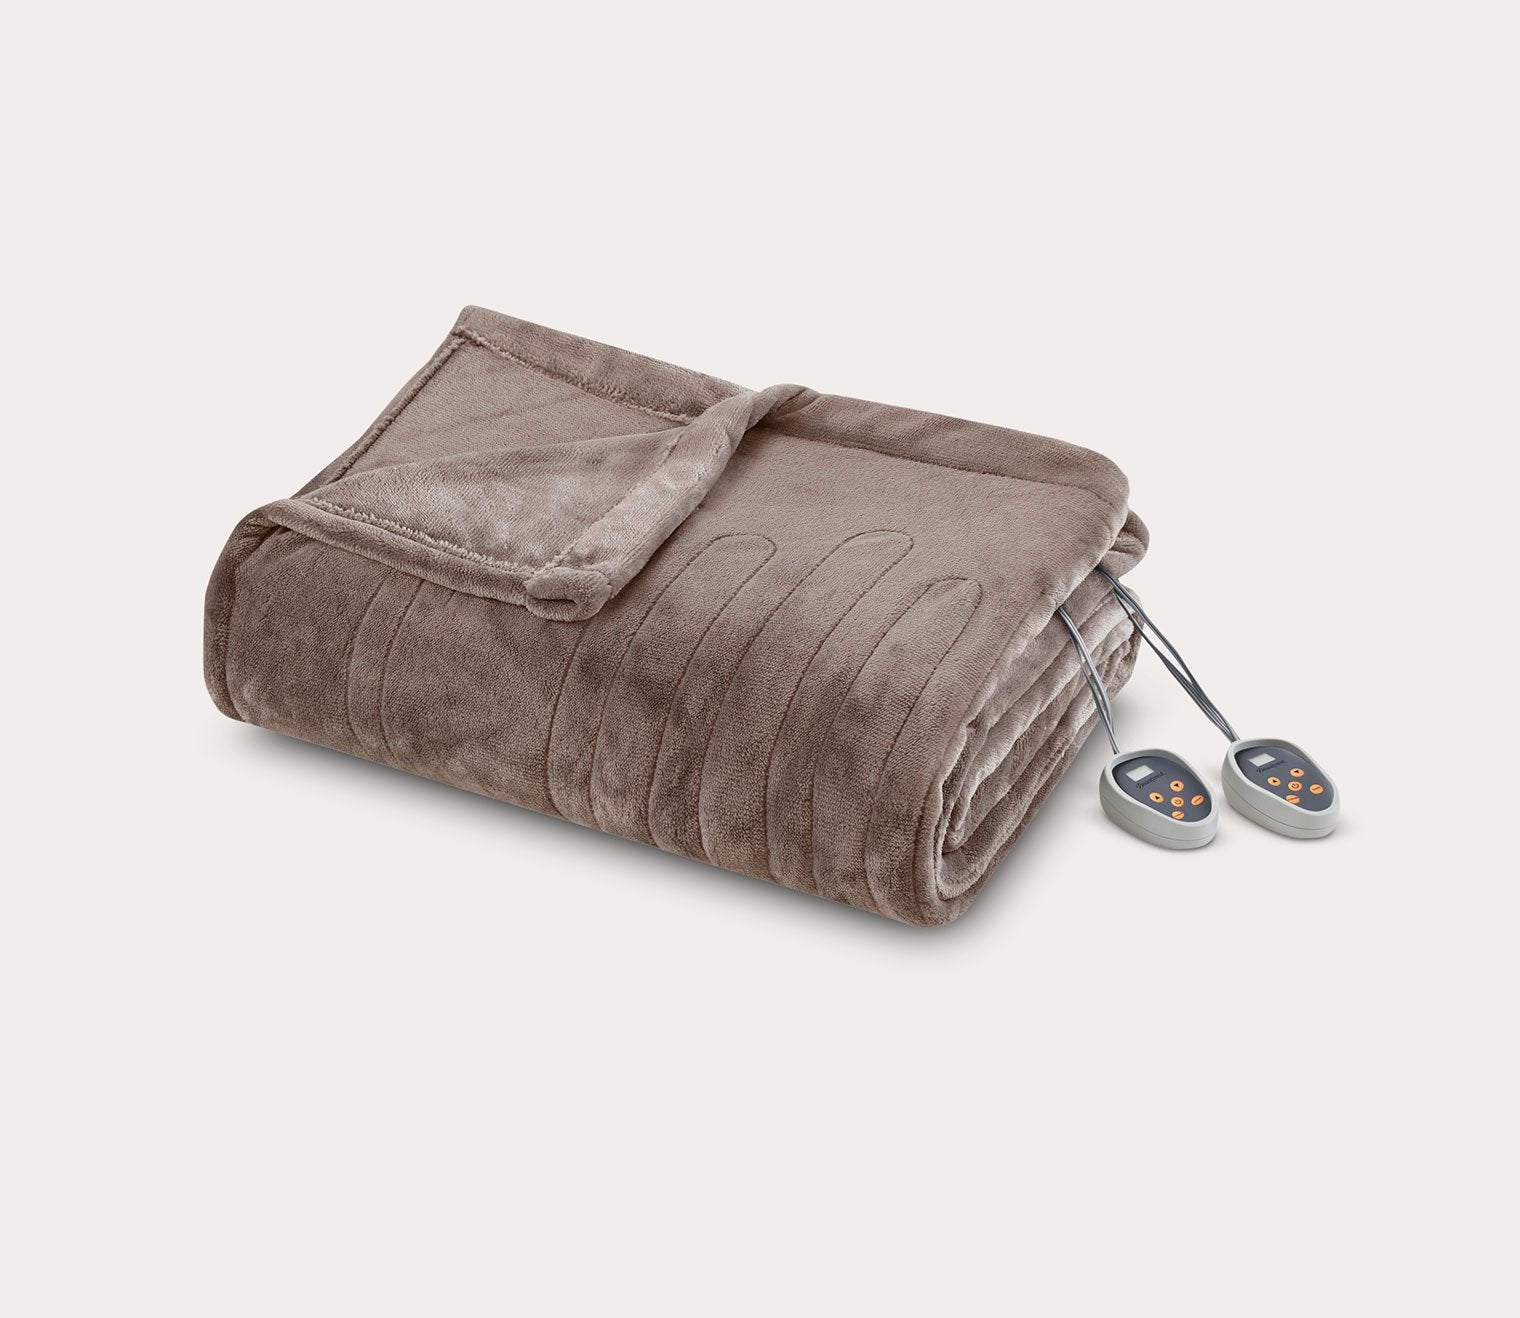 Beautyrest Heated Plush Blanket by Beautyrest